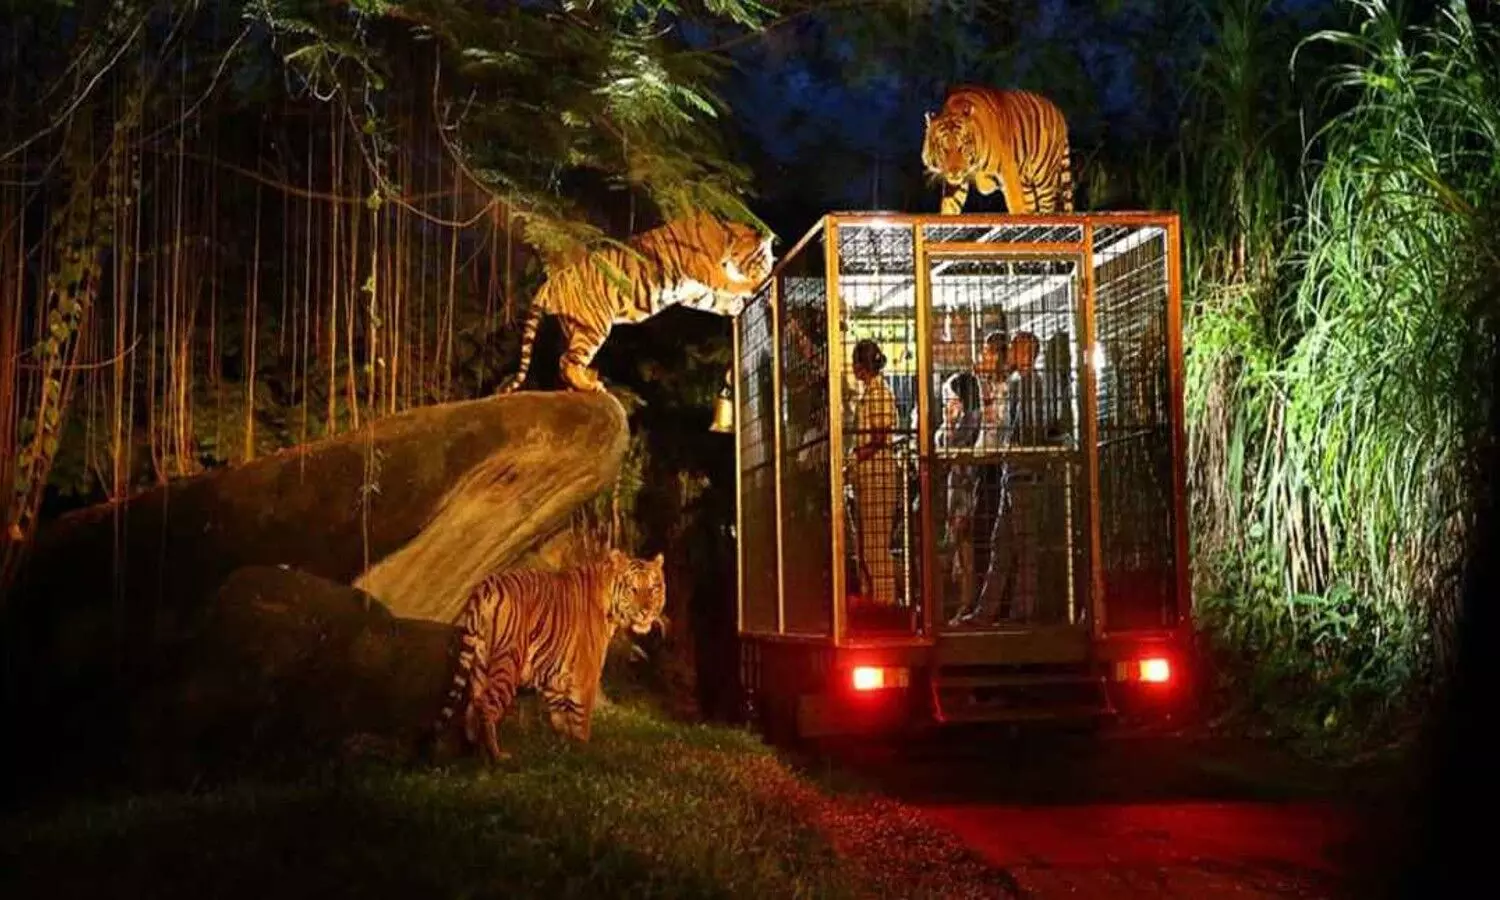 first night safari park in Lucknow